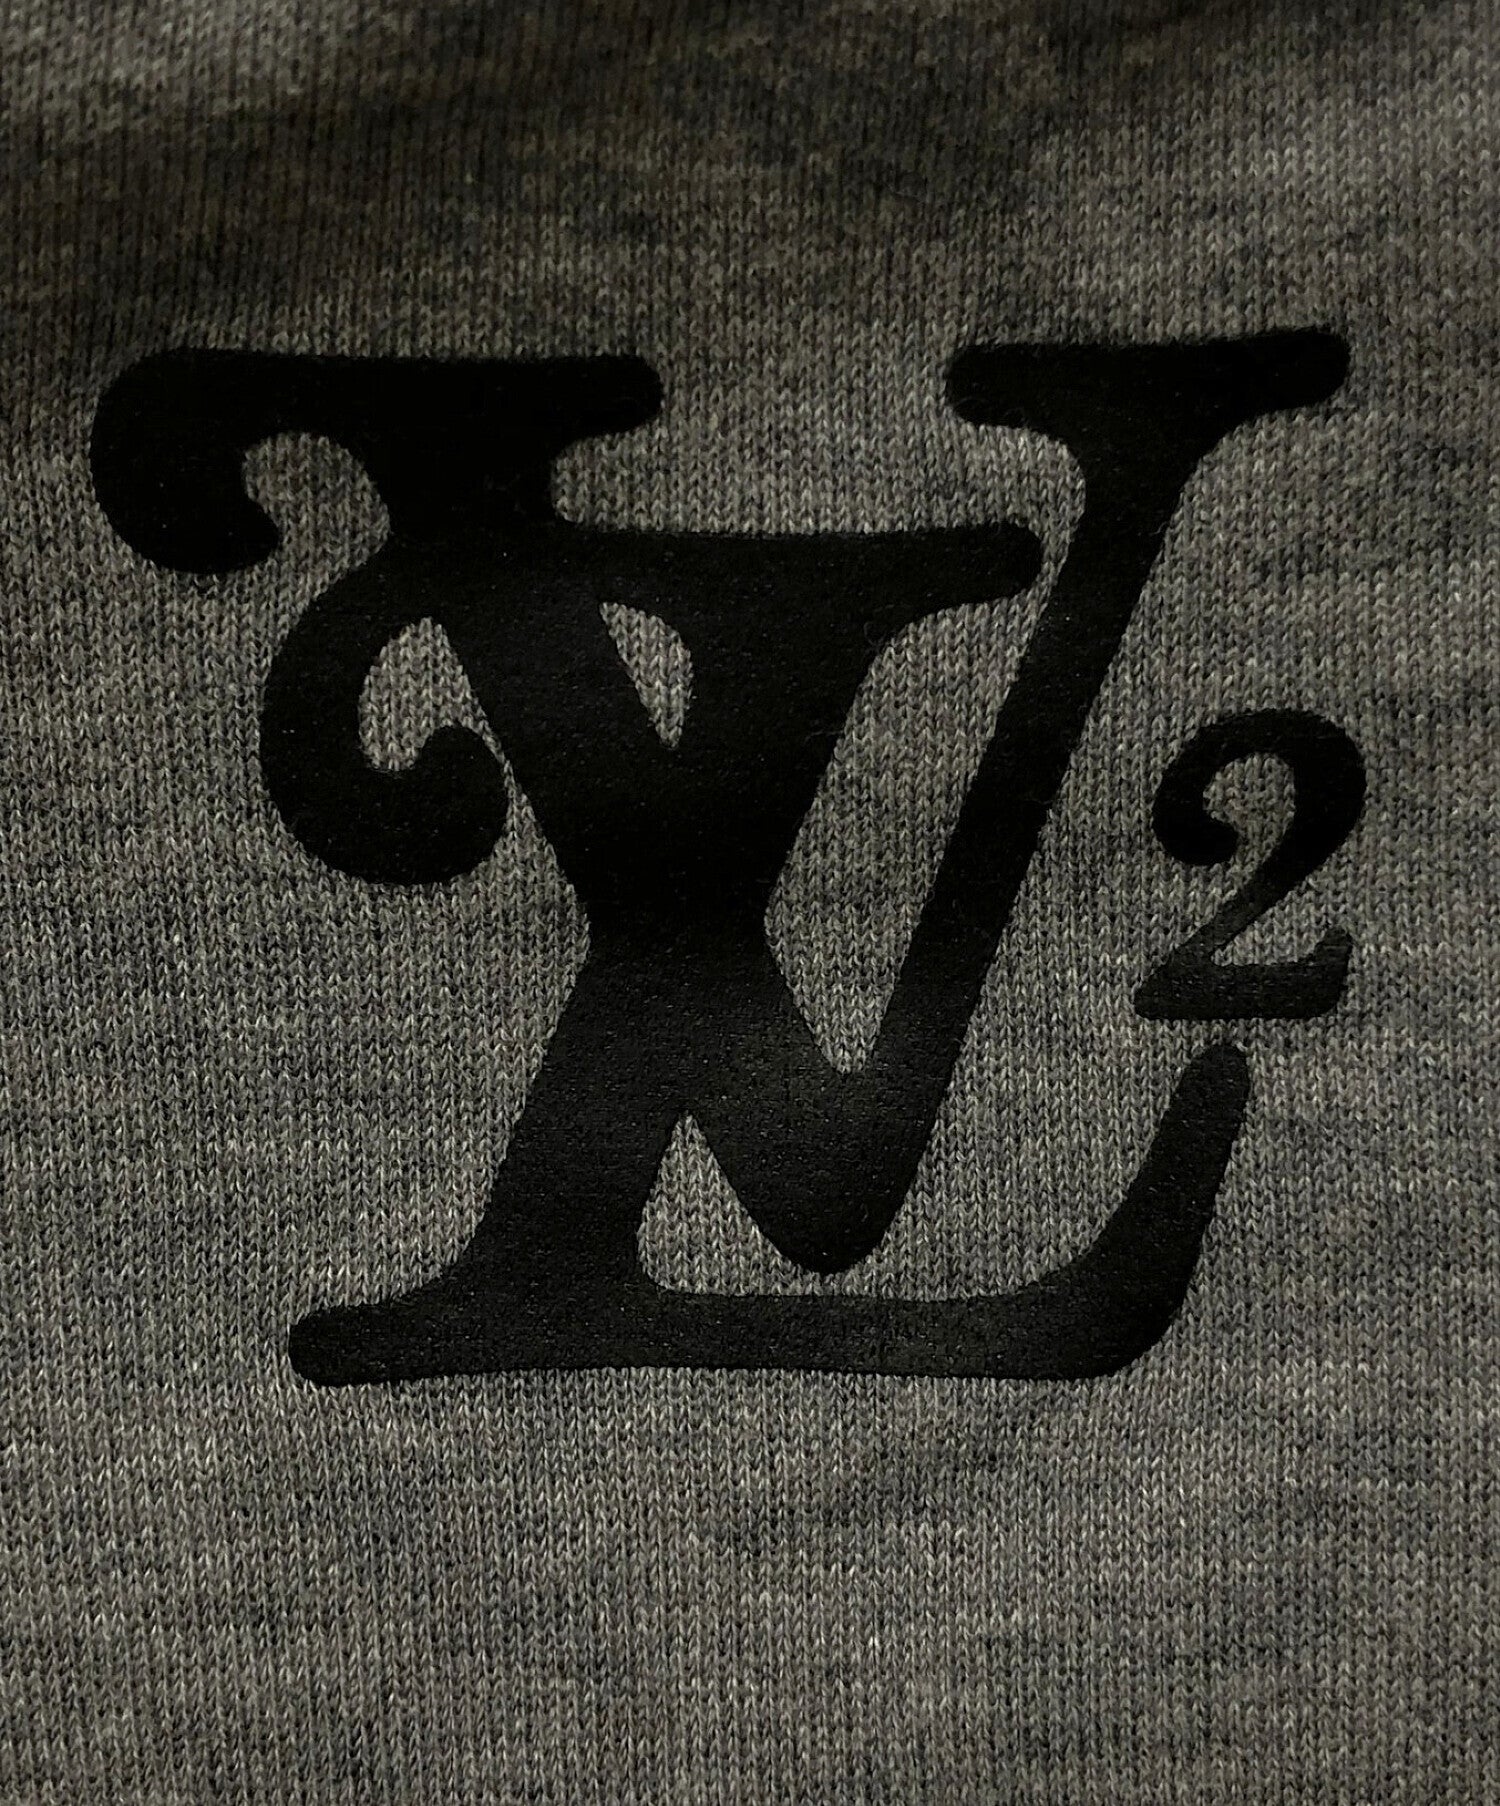 Louis Vuitton Heart printed crewneck sweatshirt, c99